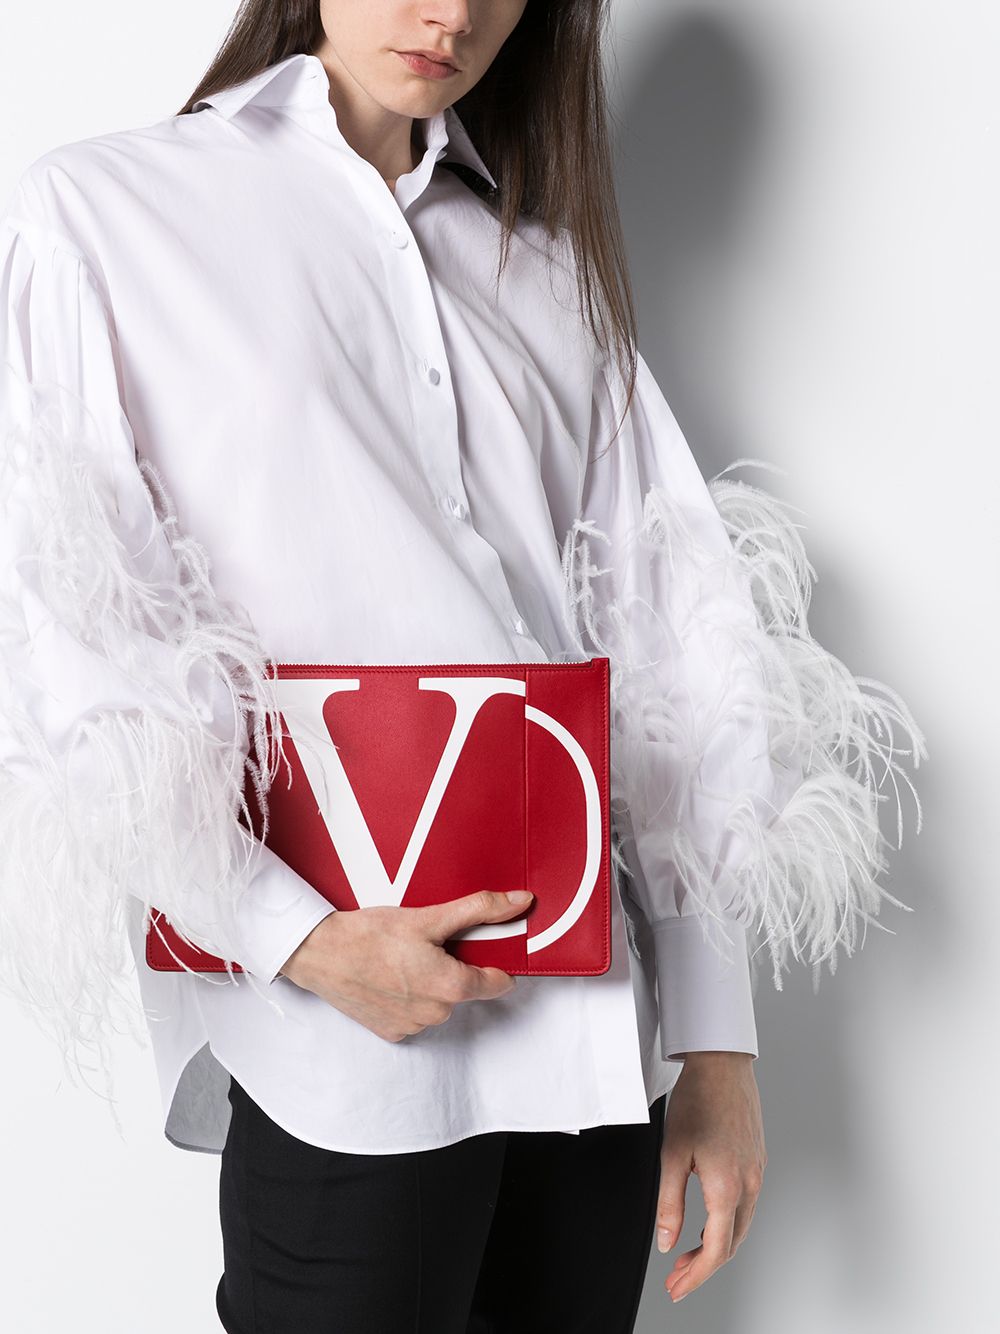 фото Valentino клатч garavani с логотипом vlogo